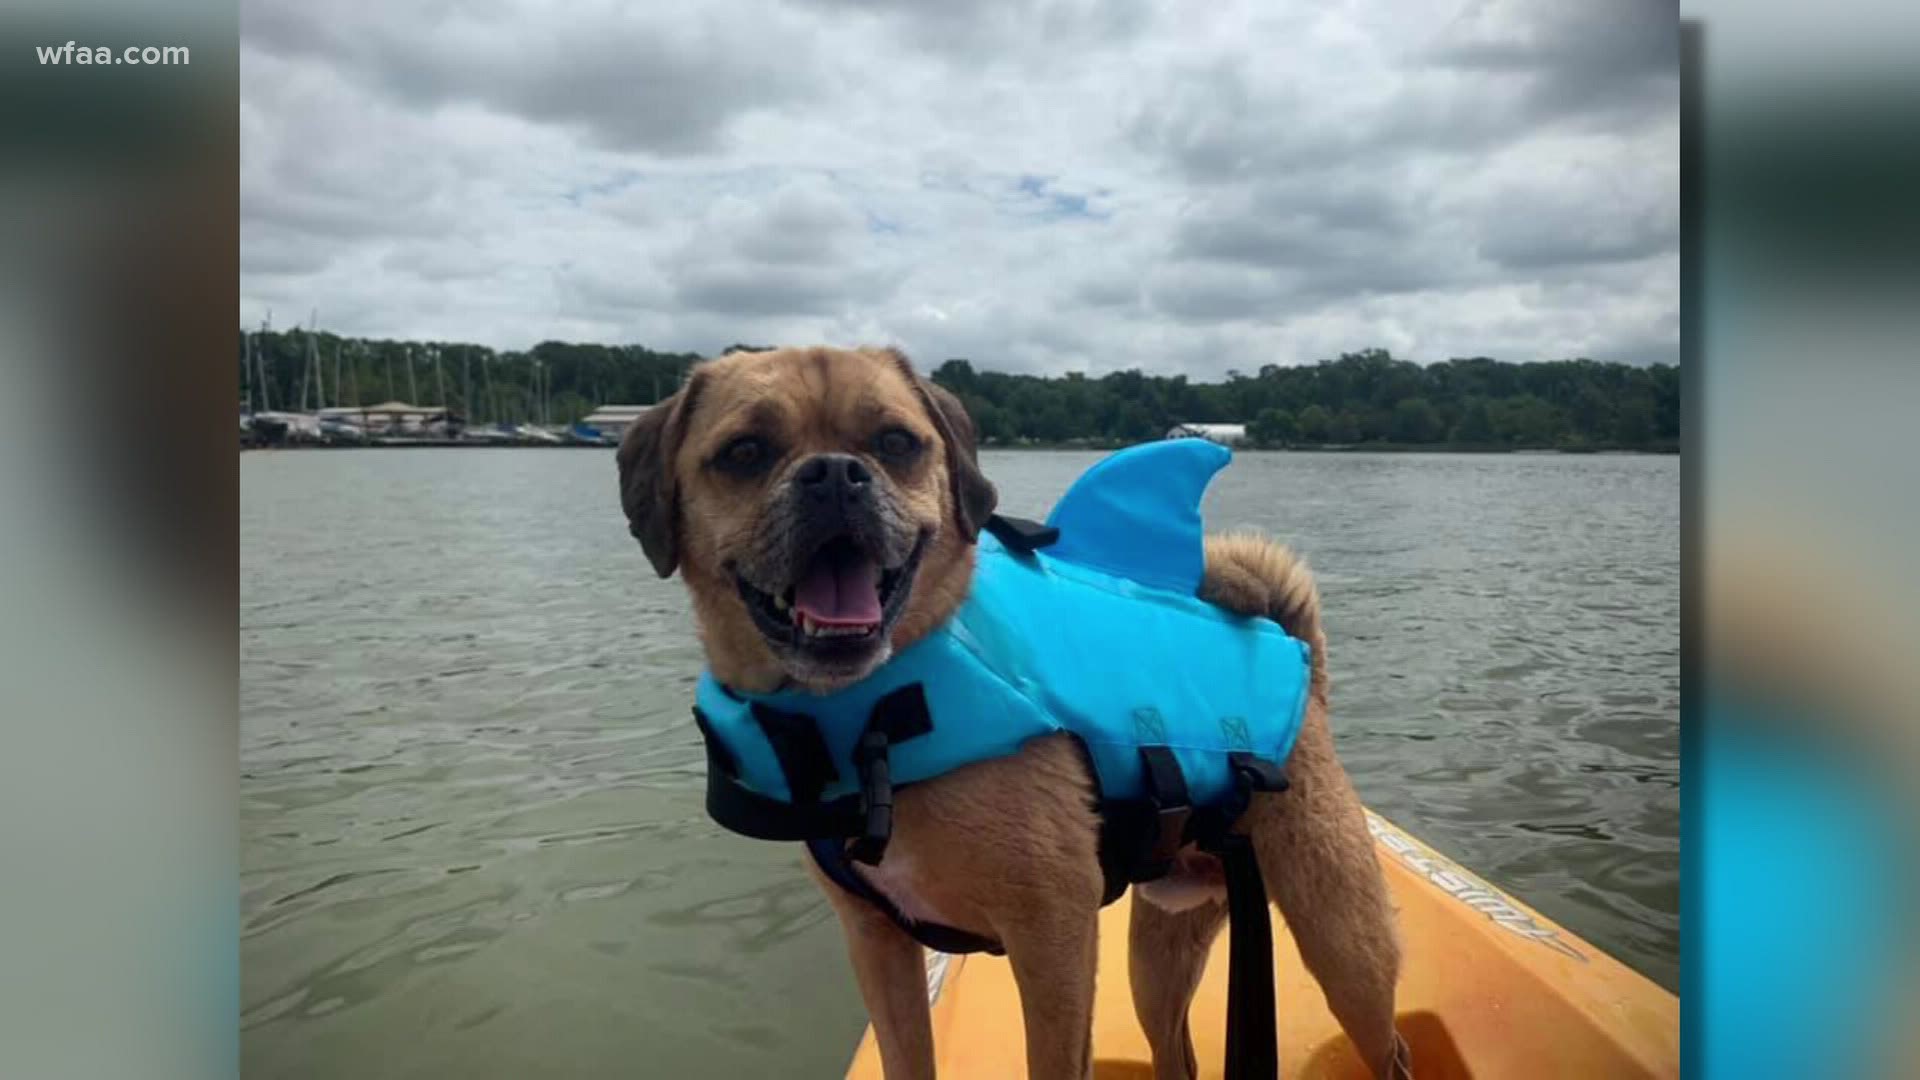 Buddy celebrated his 8th birthday by going kayaking at White Rock Lake.